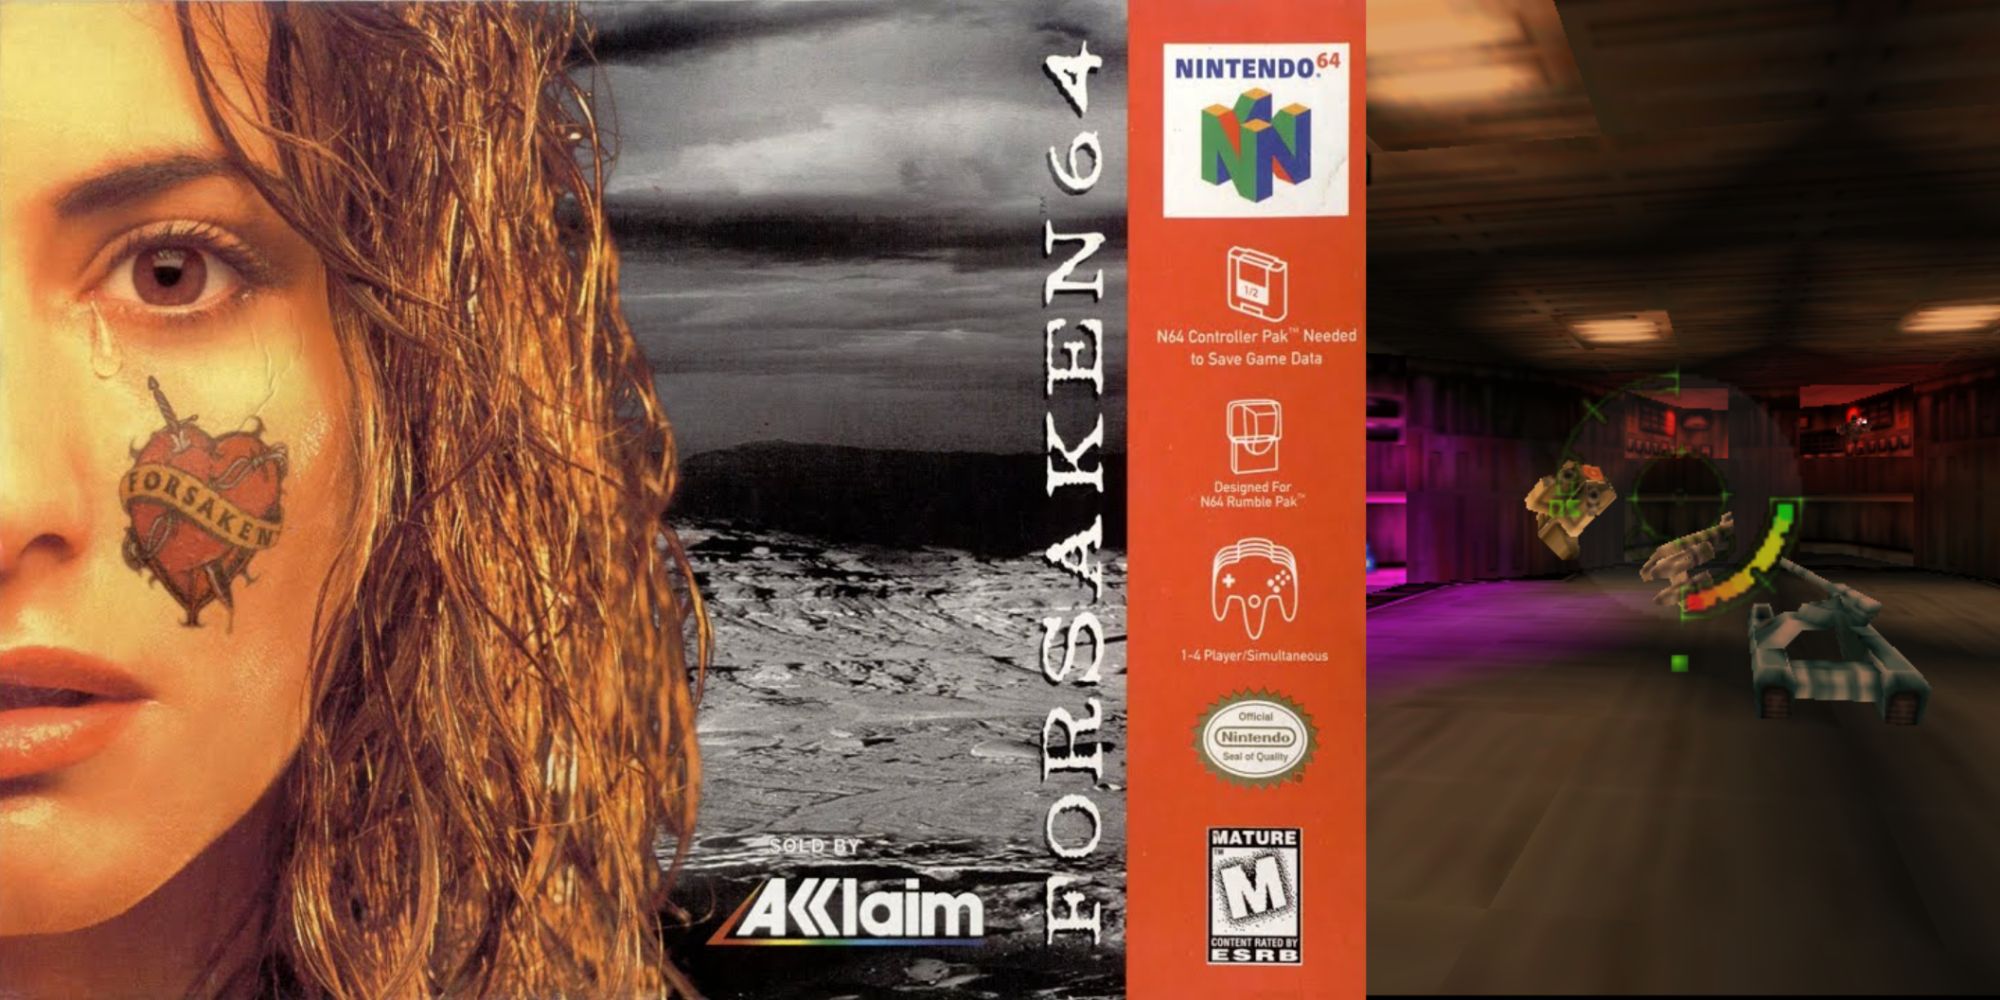 Forsaken 64 cover art and a screenshot of the game